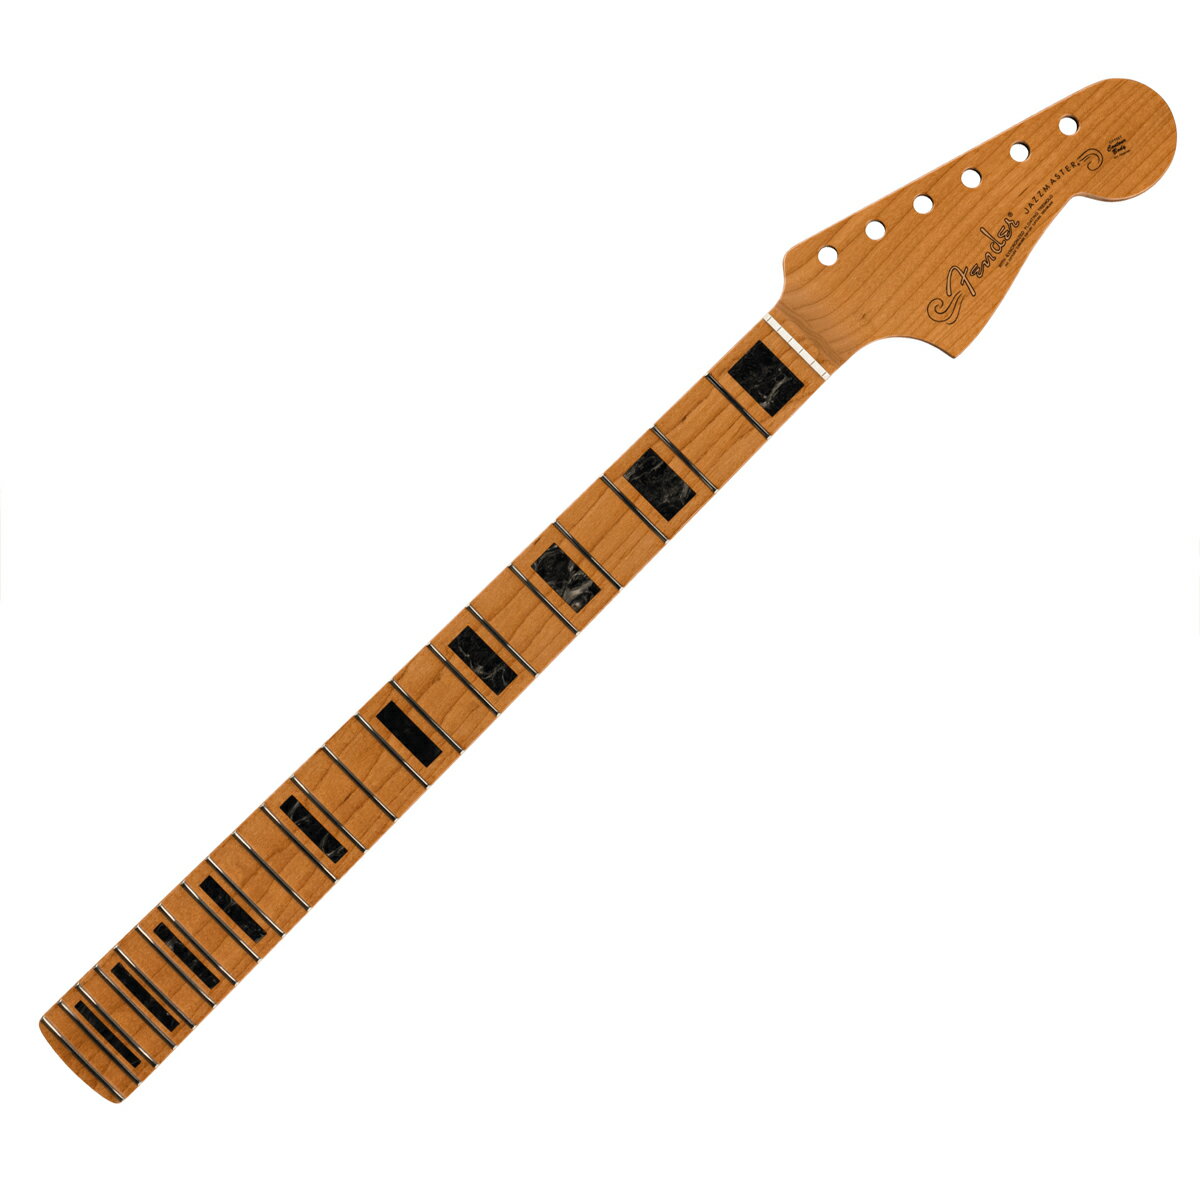 Fender Roasted Jazzmaster Neck Block Inlays -22 Medium Jumbo Frets- 9.5" Radius Maple Modern C Shape 新品